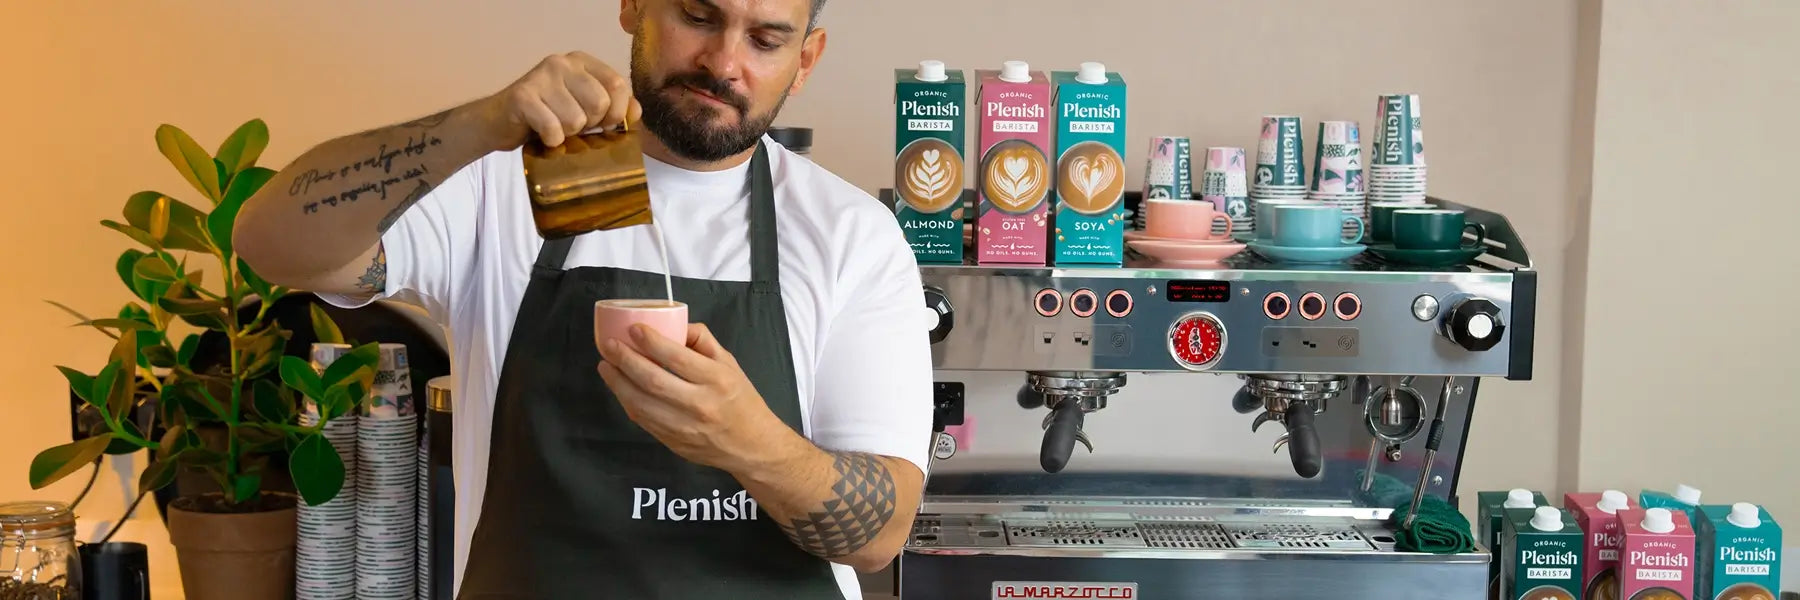 Plenish Barista making coffee in front of coffee machine and Plenish plant milks